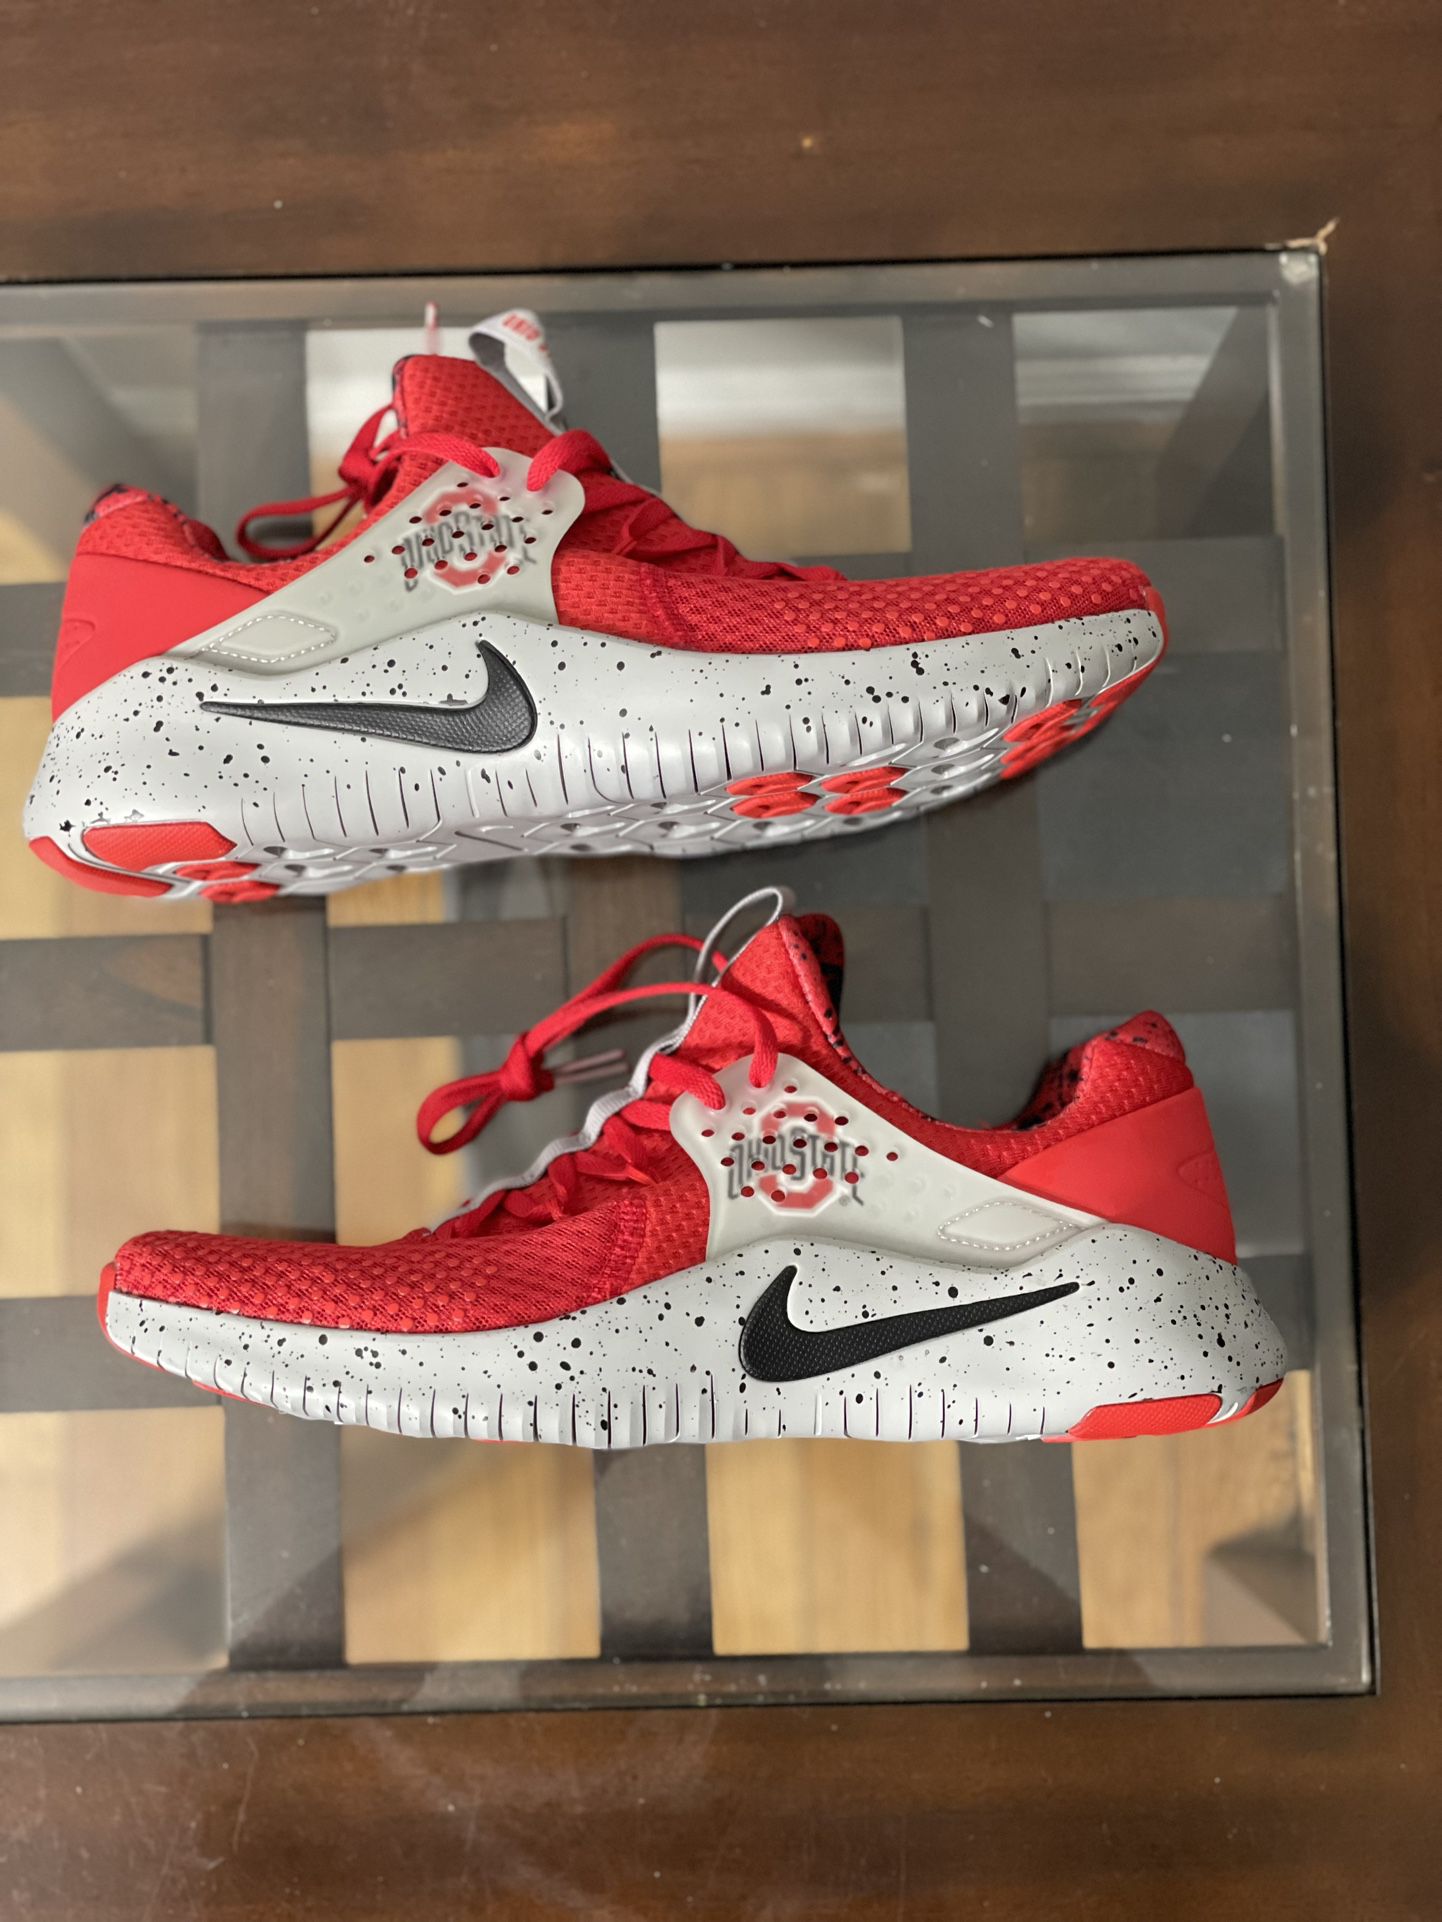 Nike Men's Free TR 8 Red Running Sneakers Size 9.5 Ohio State Buckeye AR0420-600